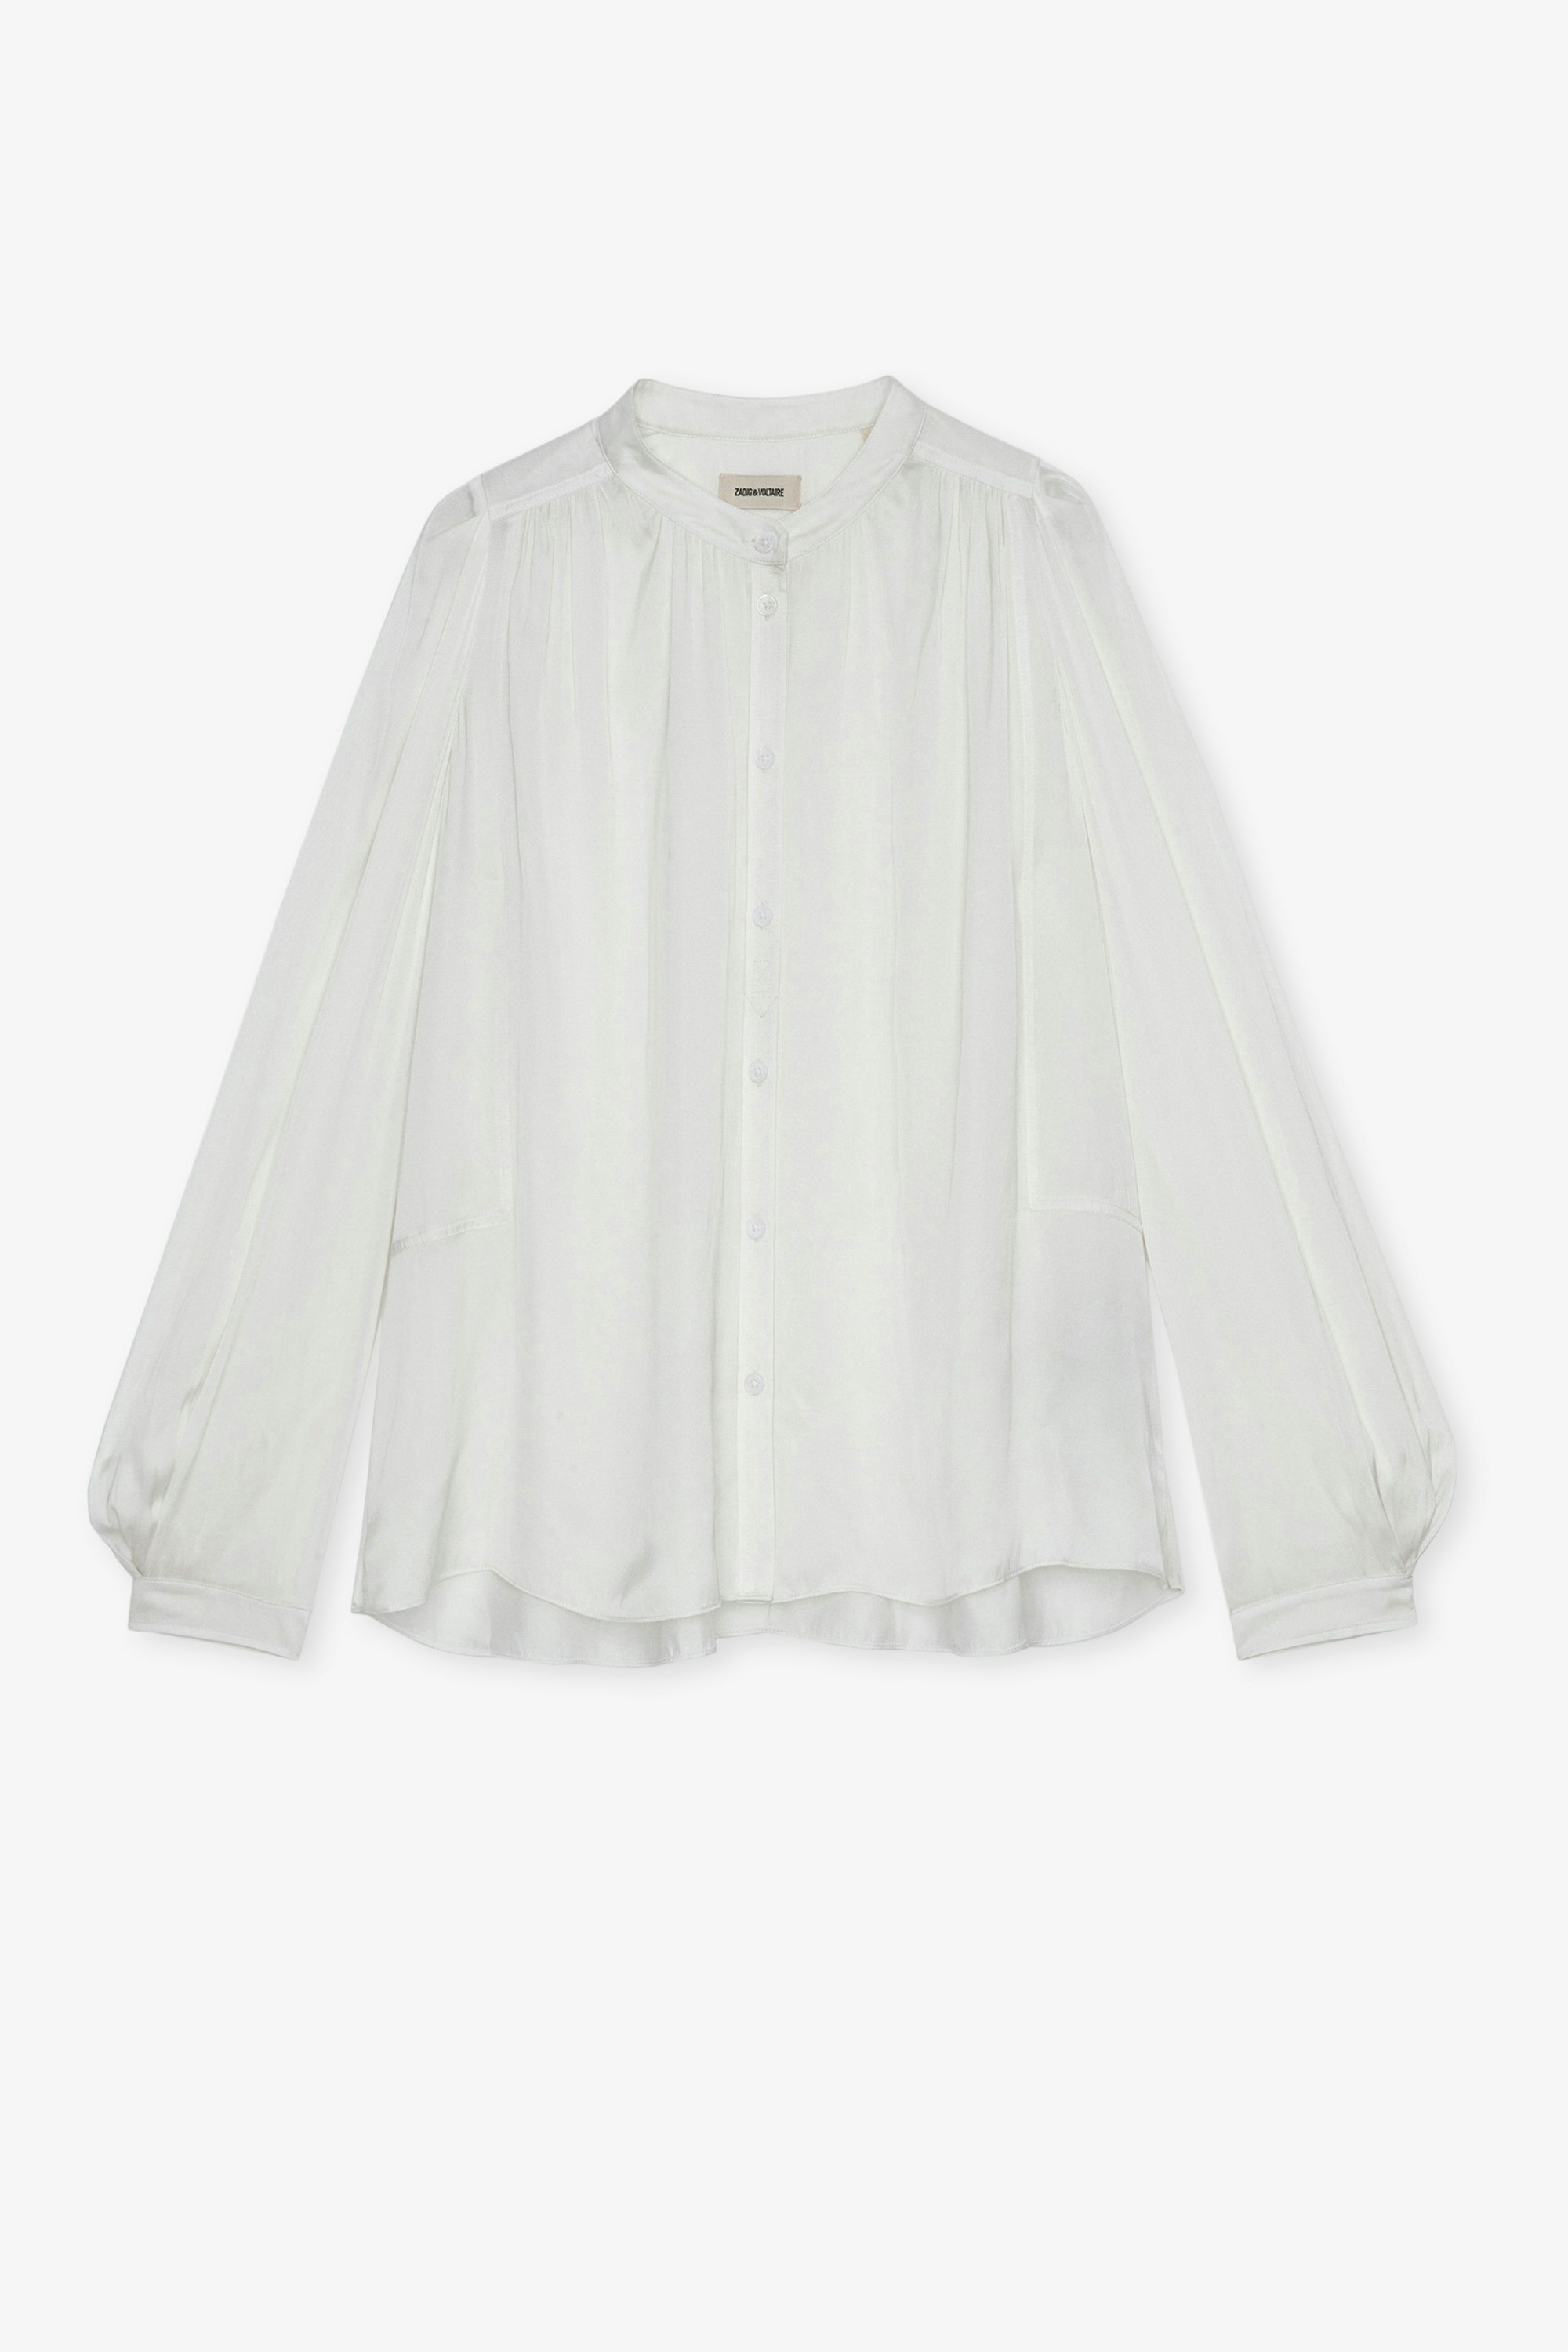 Tchin Satin Blouse - Women's white Japanese satin blouse.